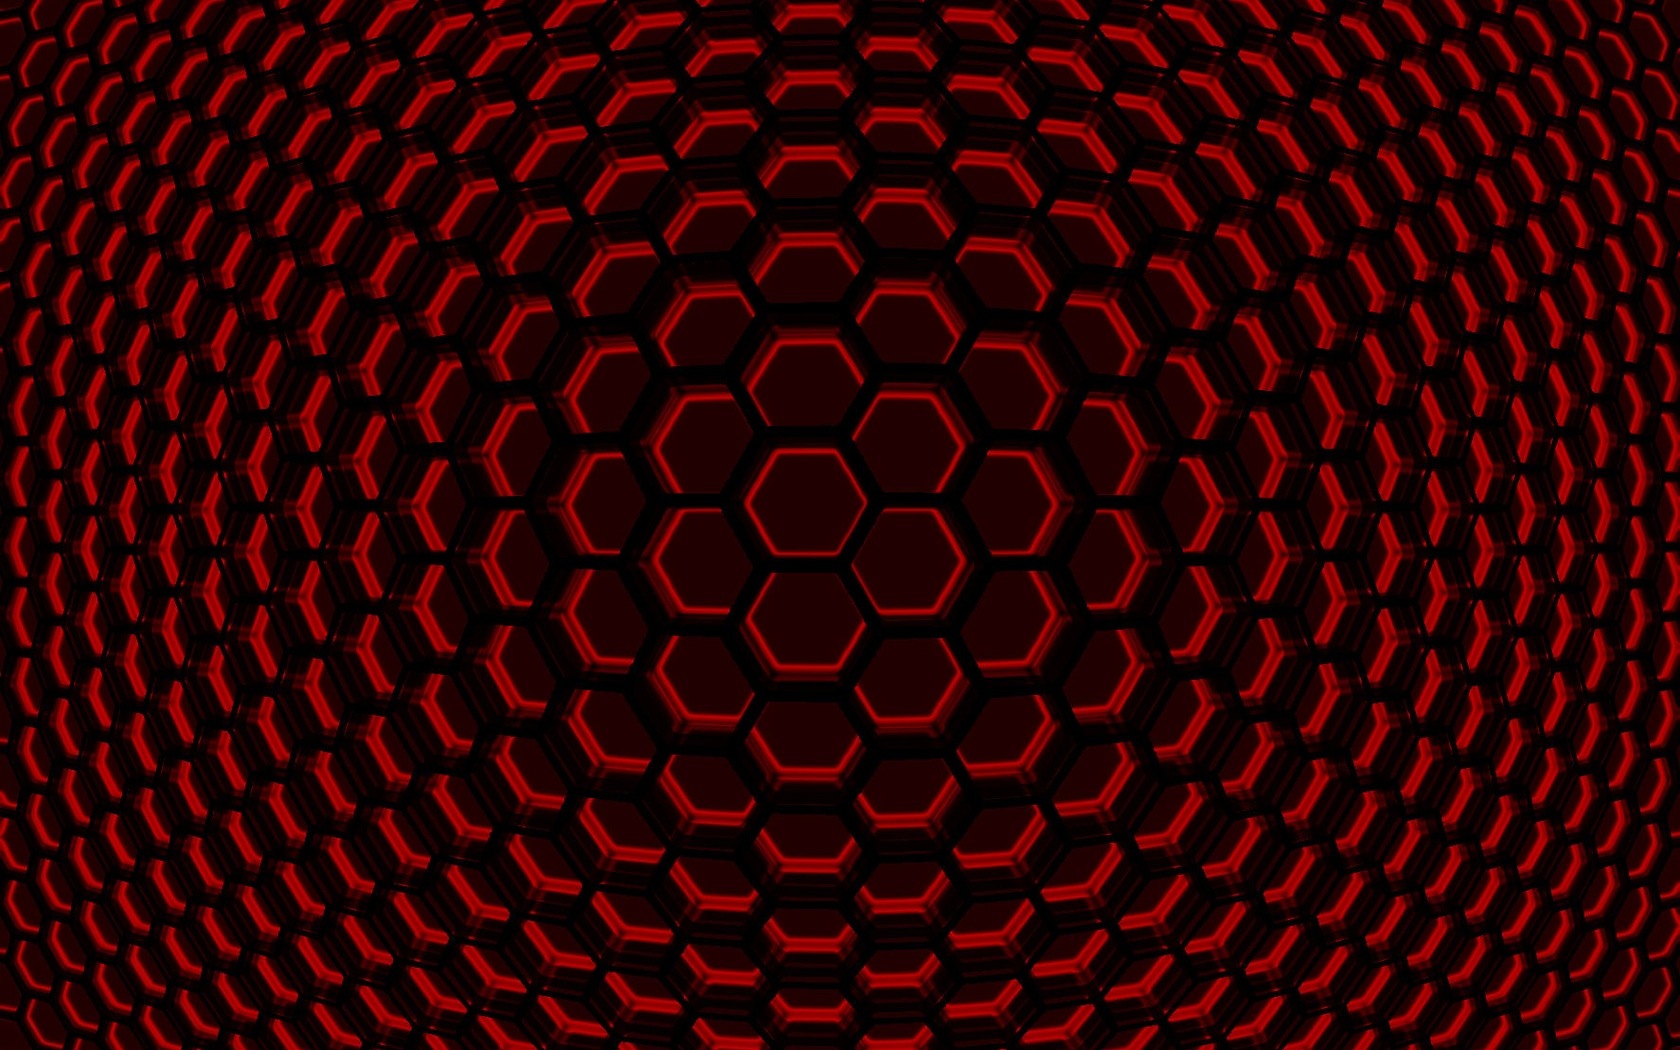 Red Hexagon Wallpapers